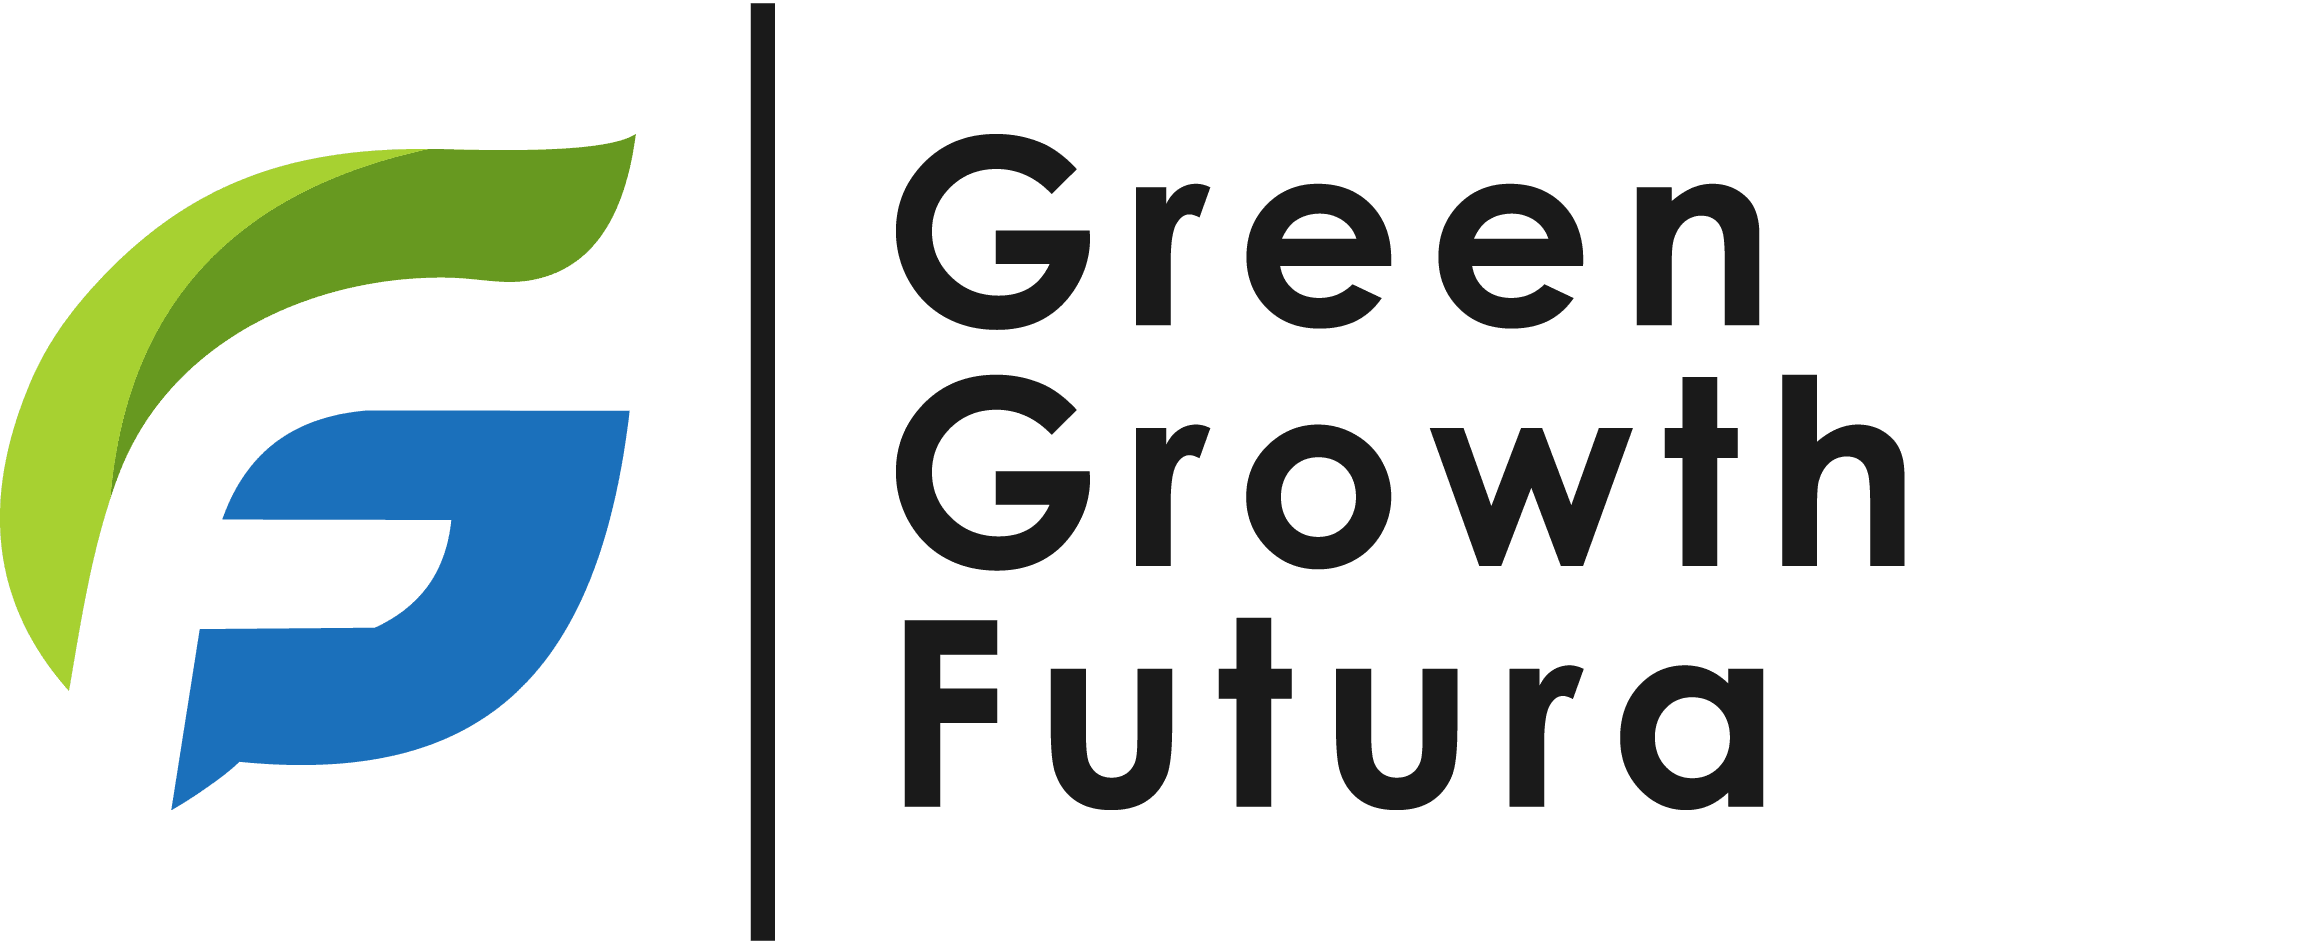 Green Growth Futura GmbH (GGF) logo